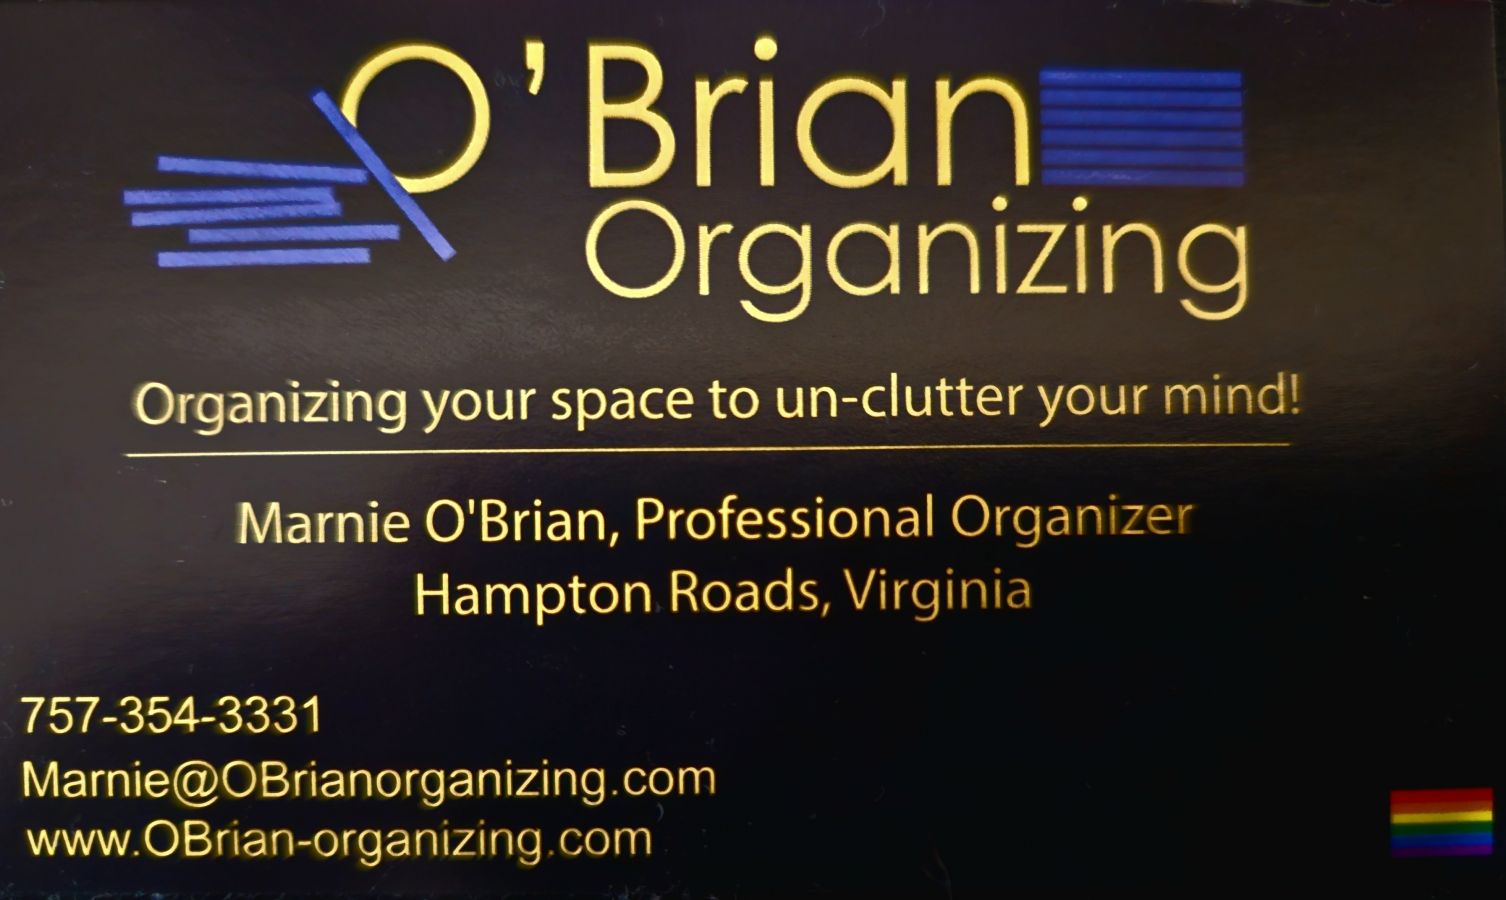 Visit O'Brian Organizing